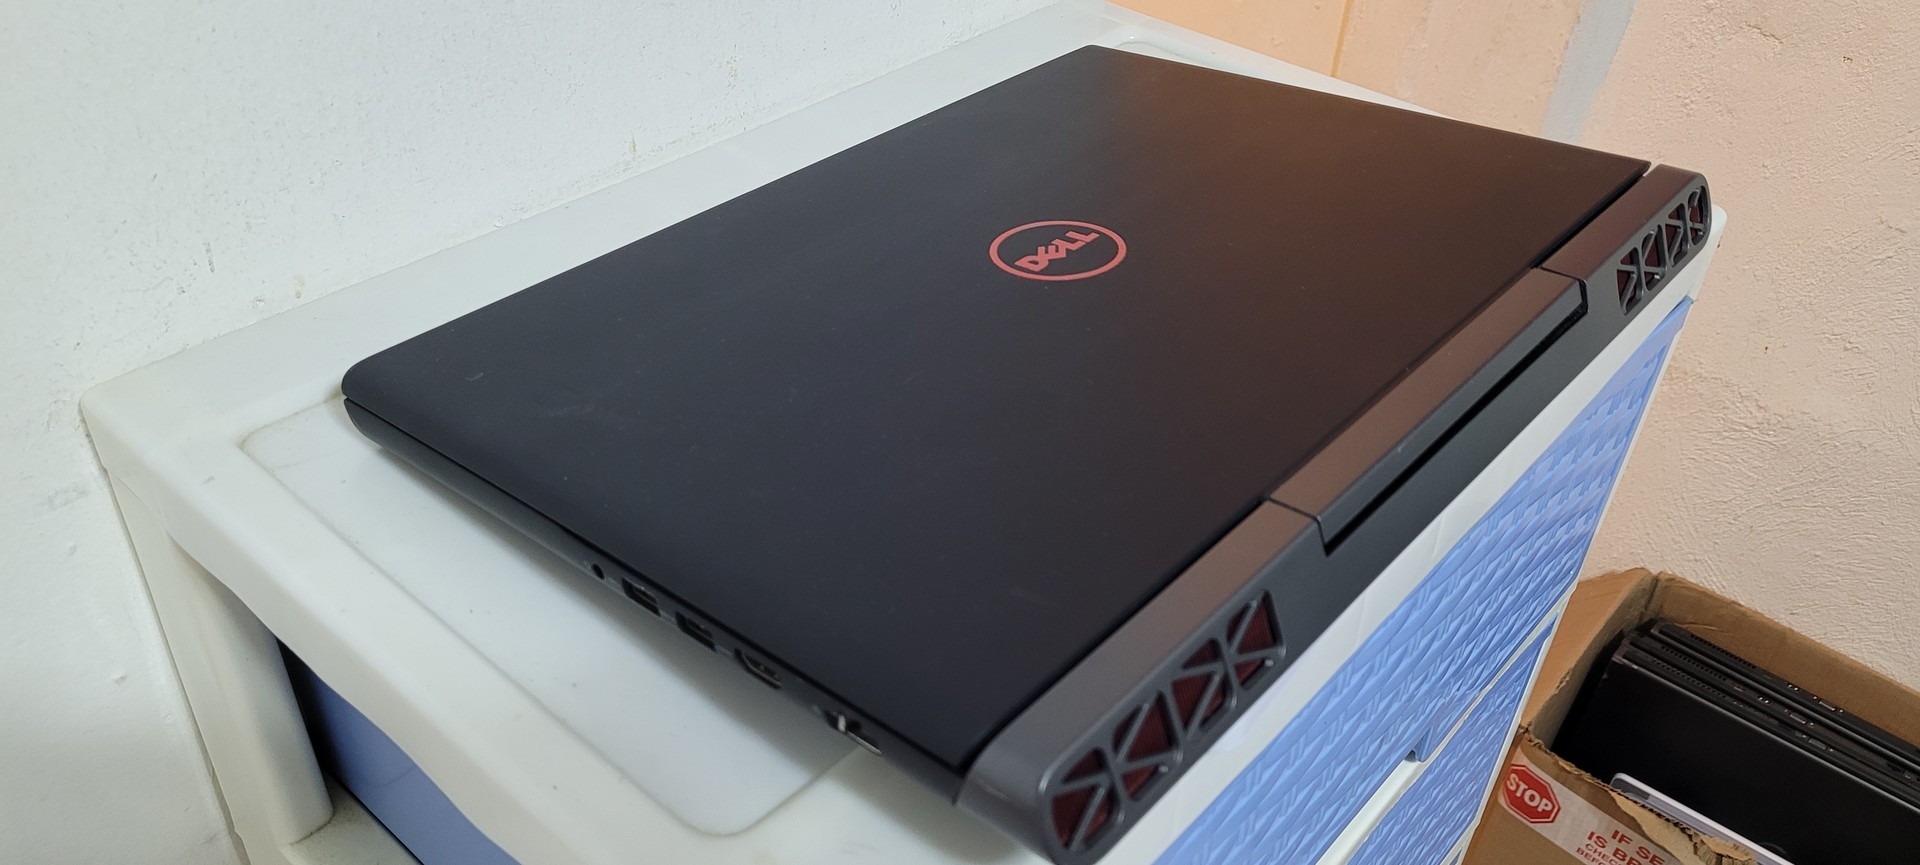 computadoras y laptops - Laptop Dell Gaming Core i7 7ma Ram 16gb Nvidea Gtx 1050Ti 12gb 2